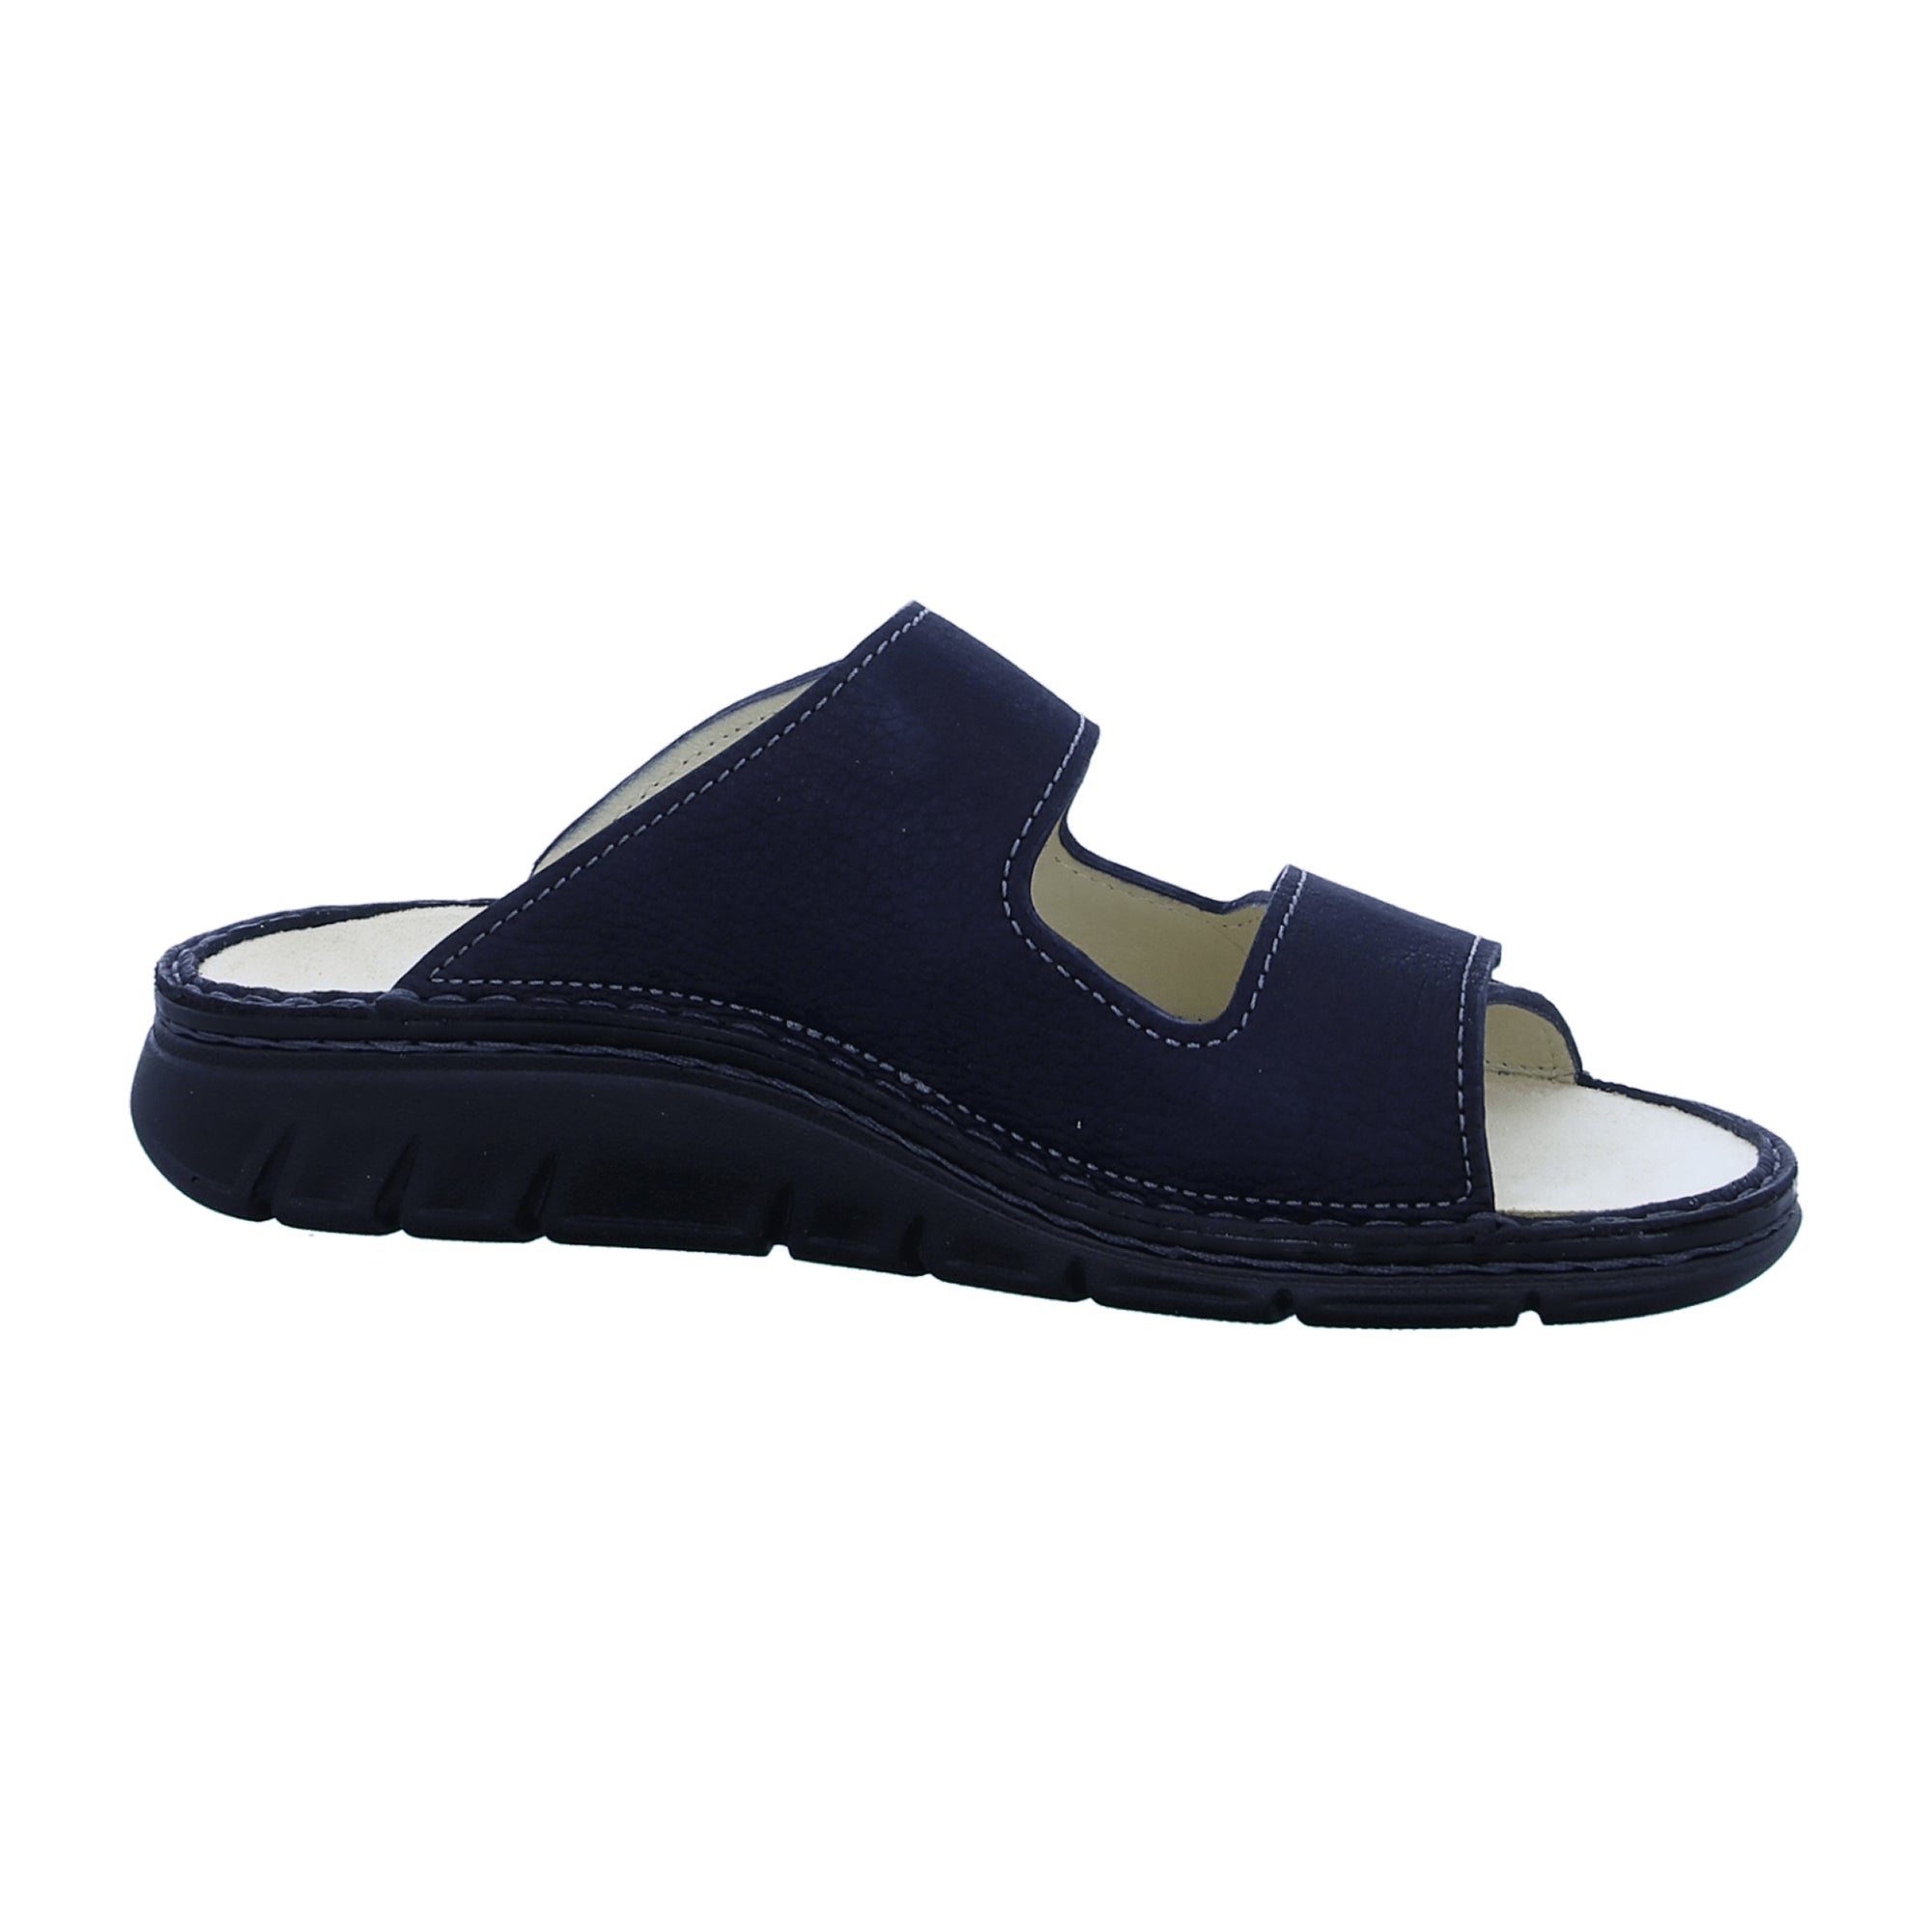 Finn Comfort Classic Men's Blue Shoes - Stylish & Durable